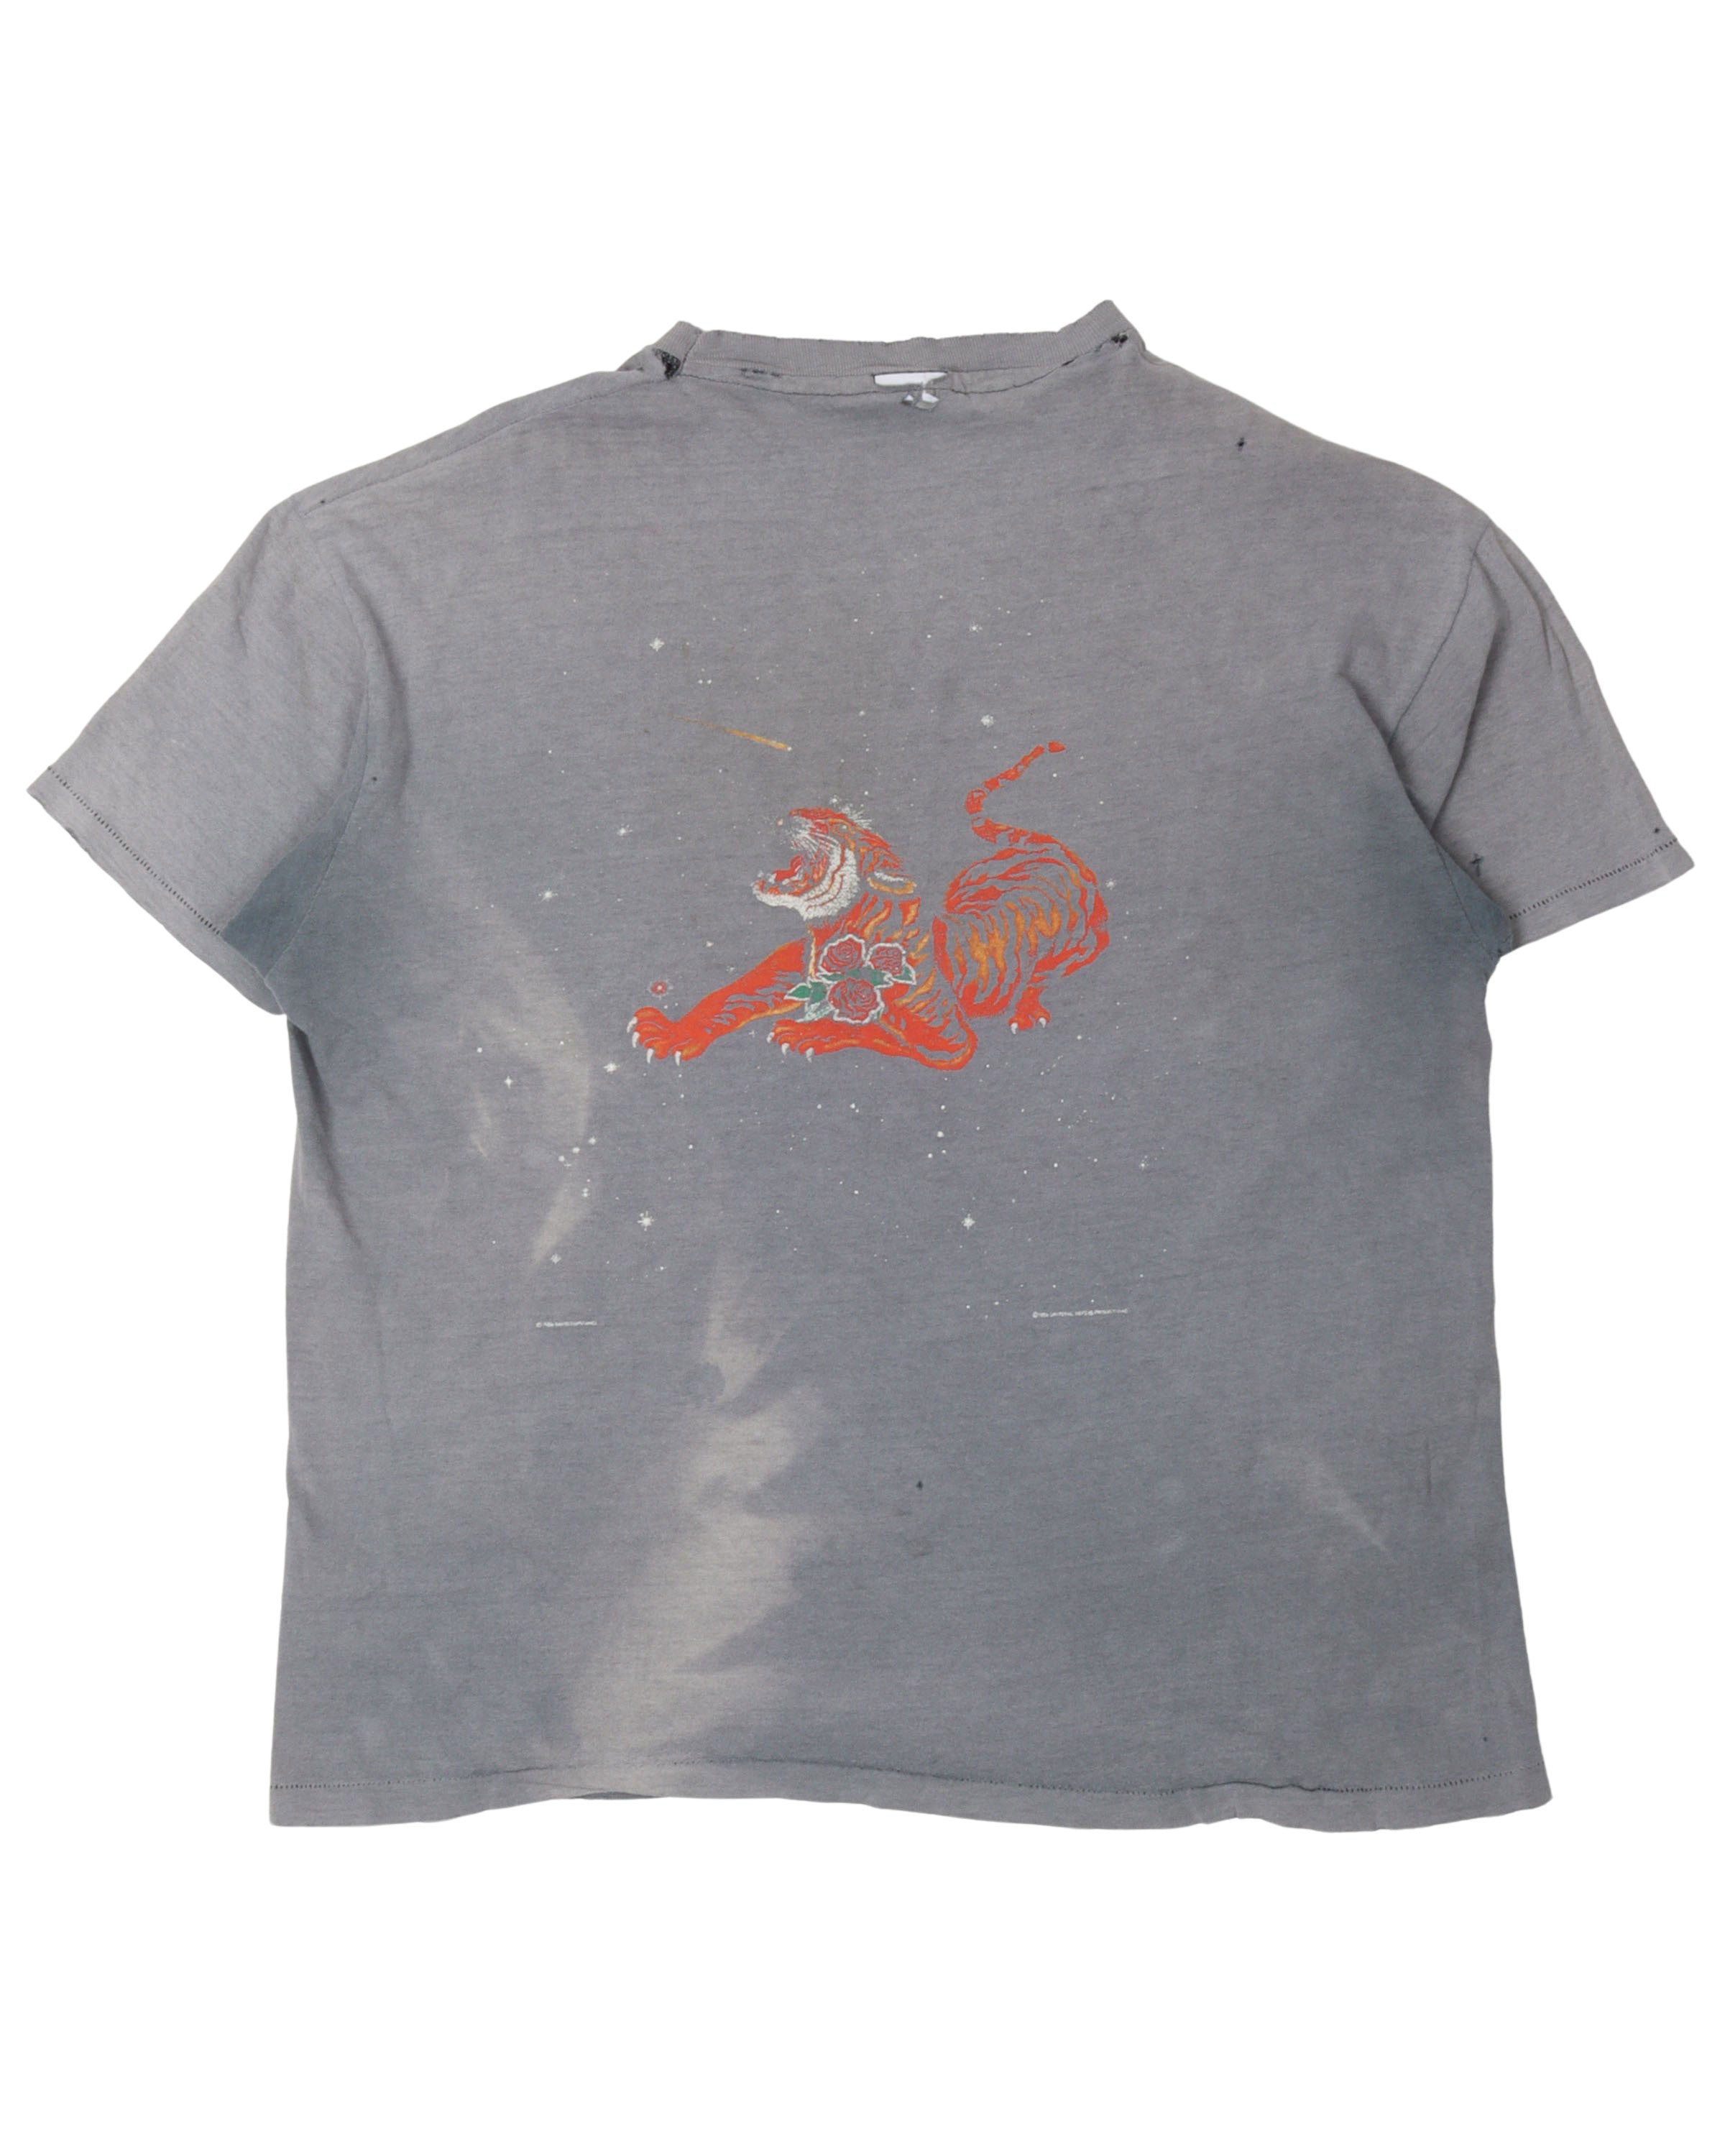 Grateful Dead Distressed Faded T-Shirt